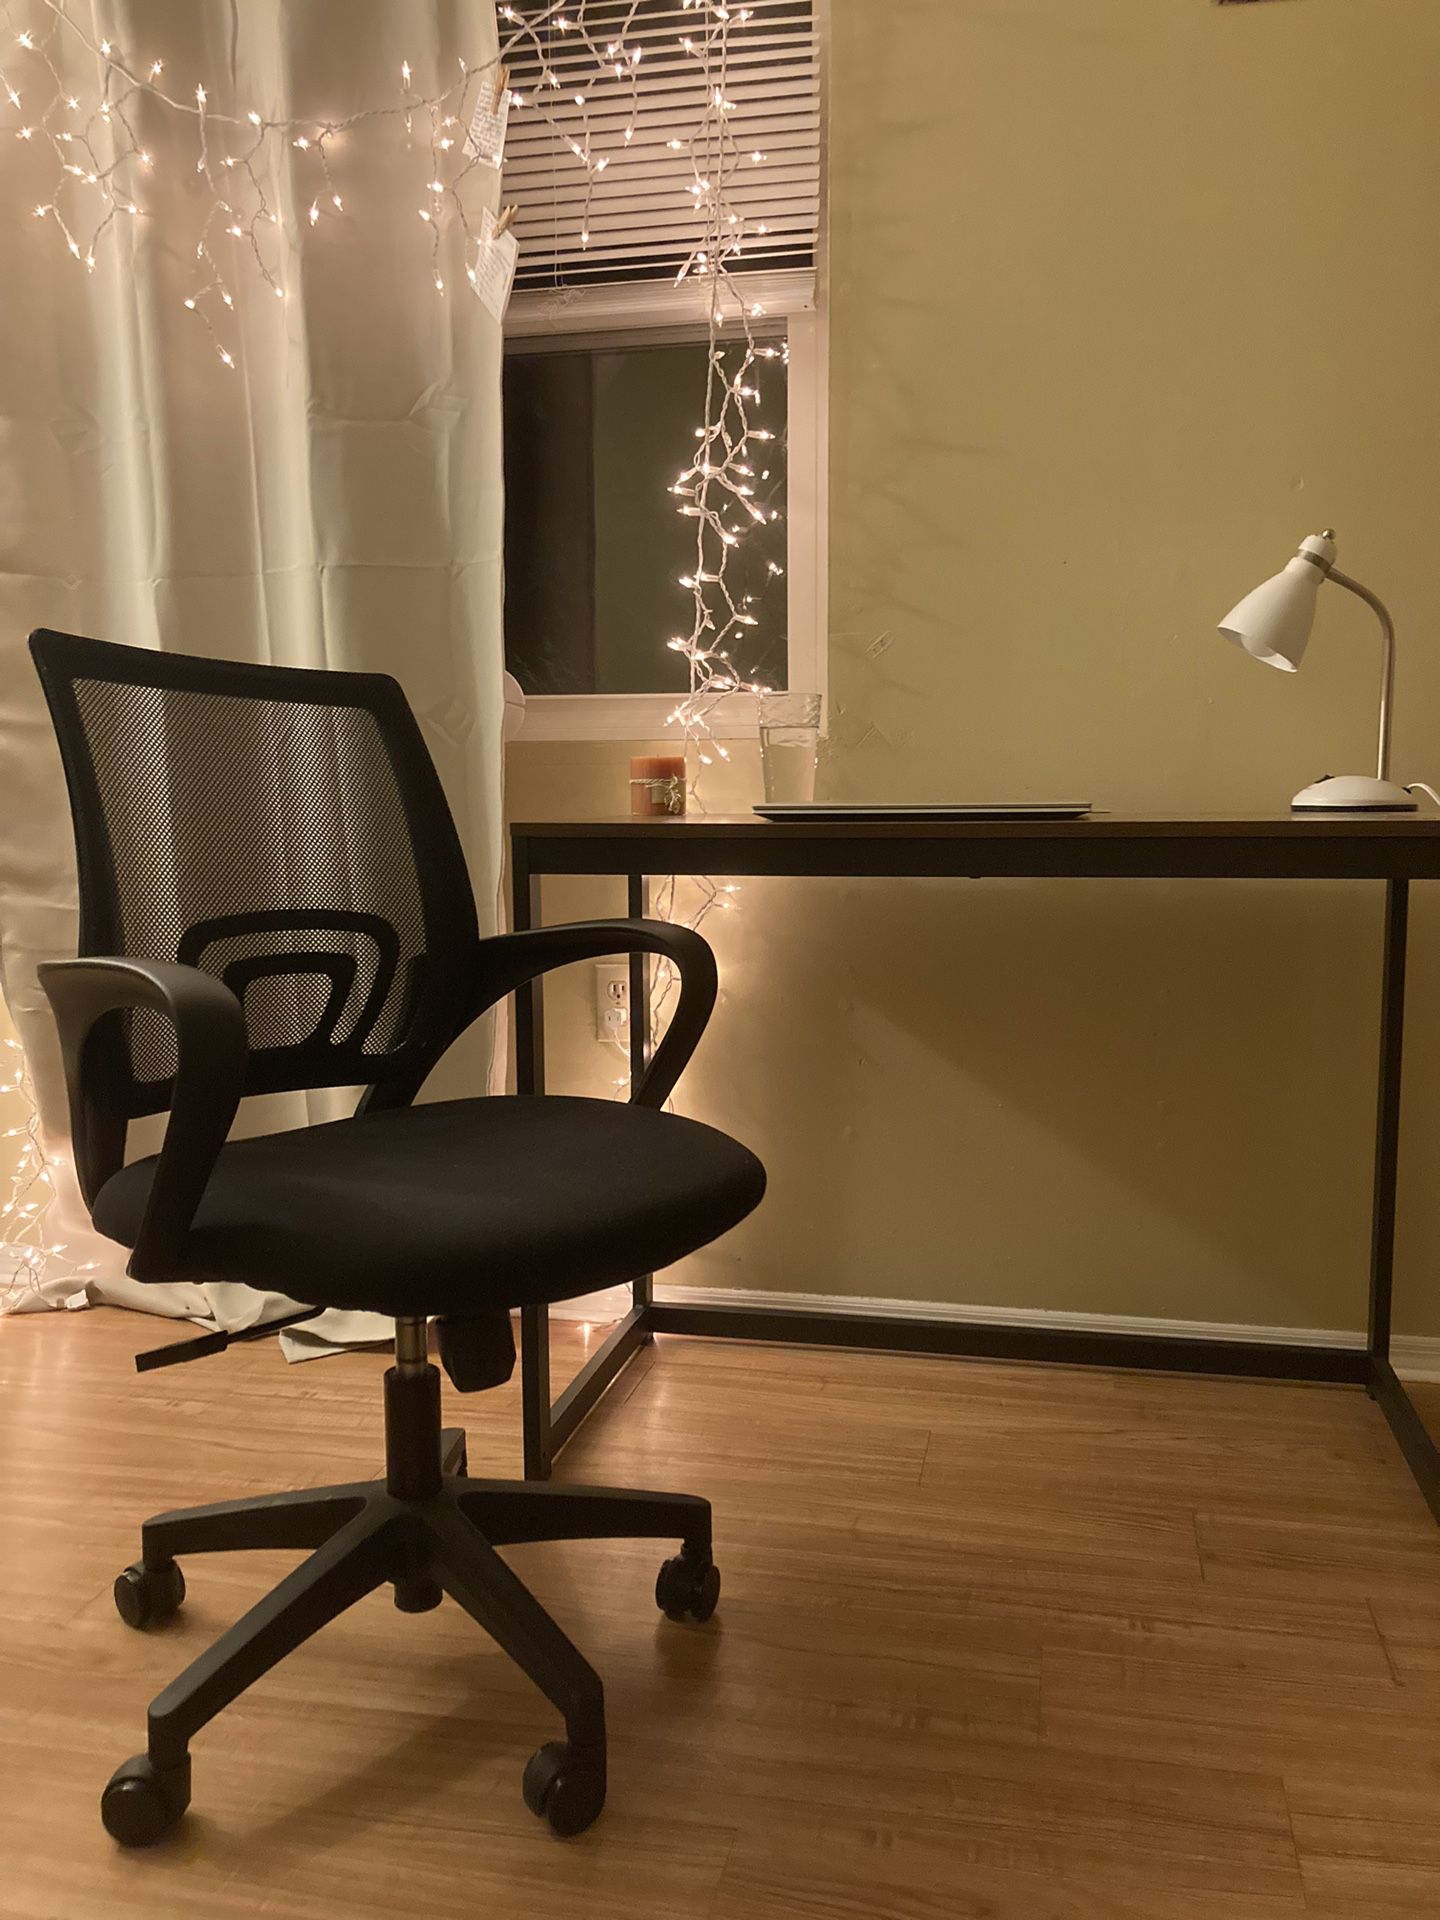 Chair, Desk. Lamp